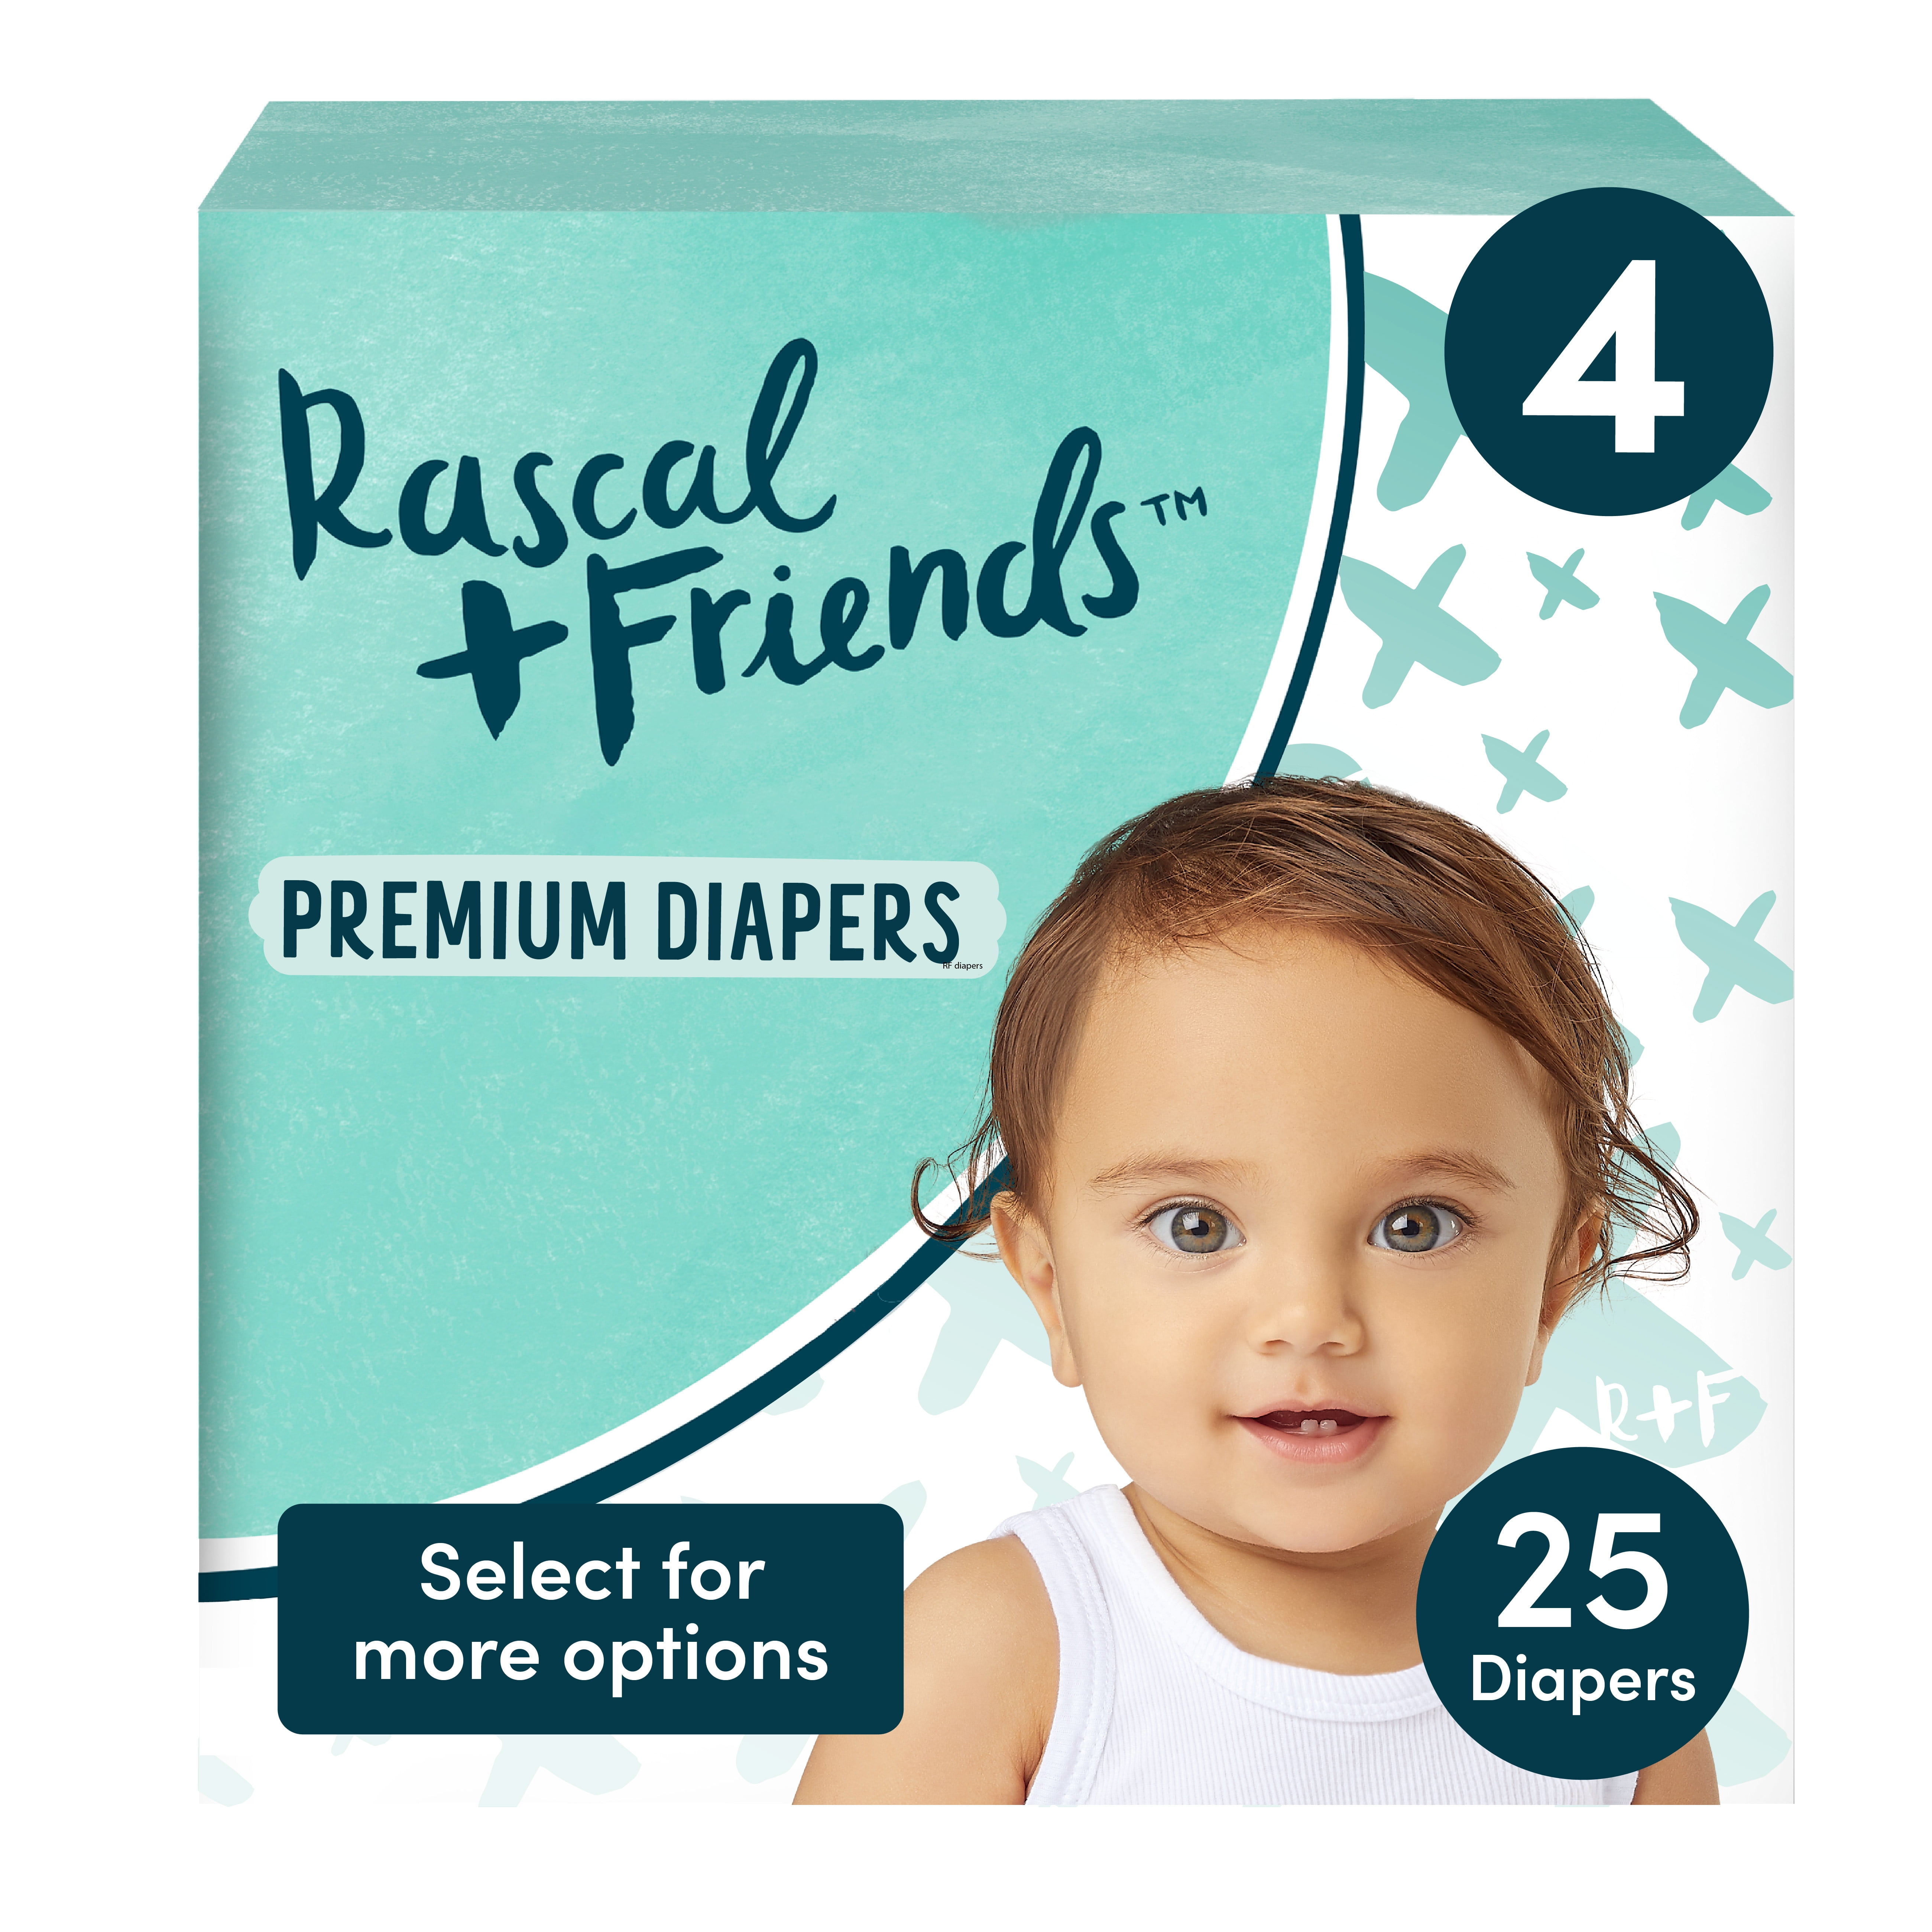 Rascal + Friends Premium Diapers, Size 4